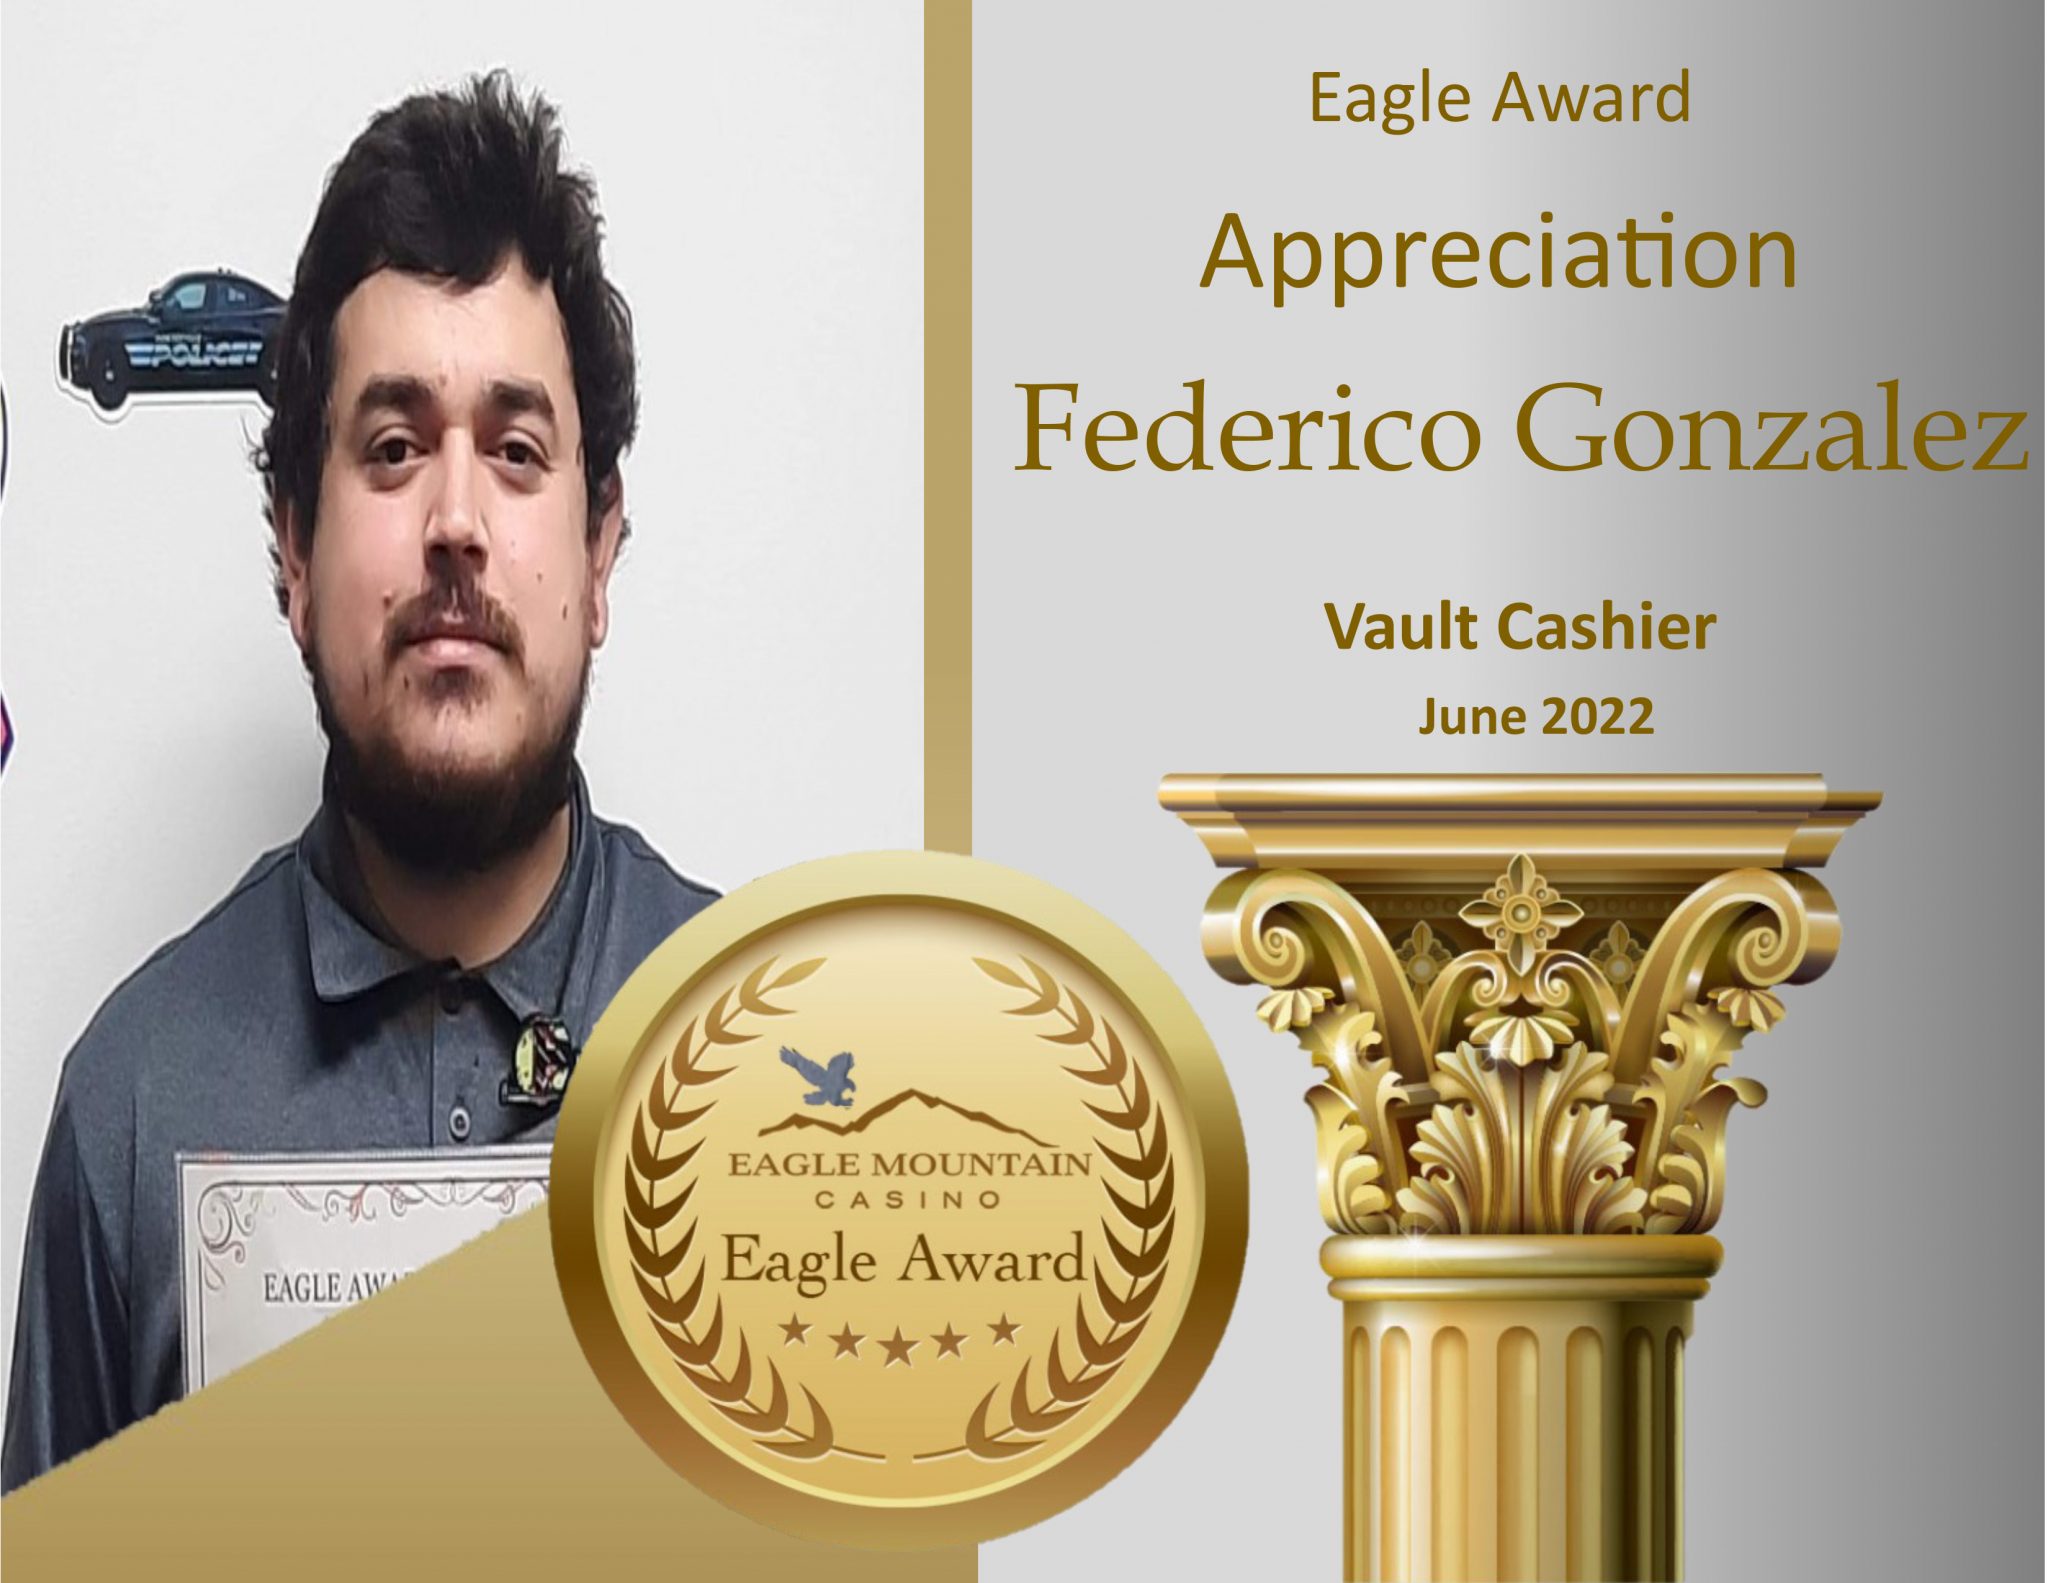 eagle mountain casino Federico Gonzalez Appreciation Pillar Winner June 22